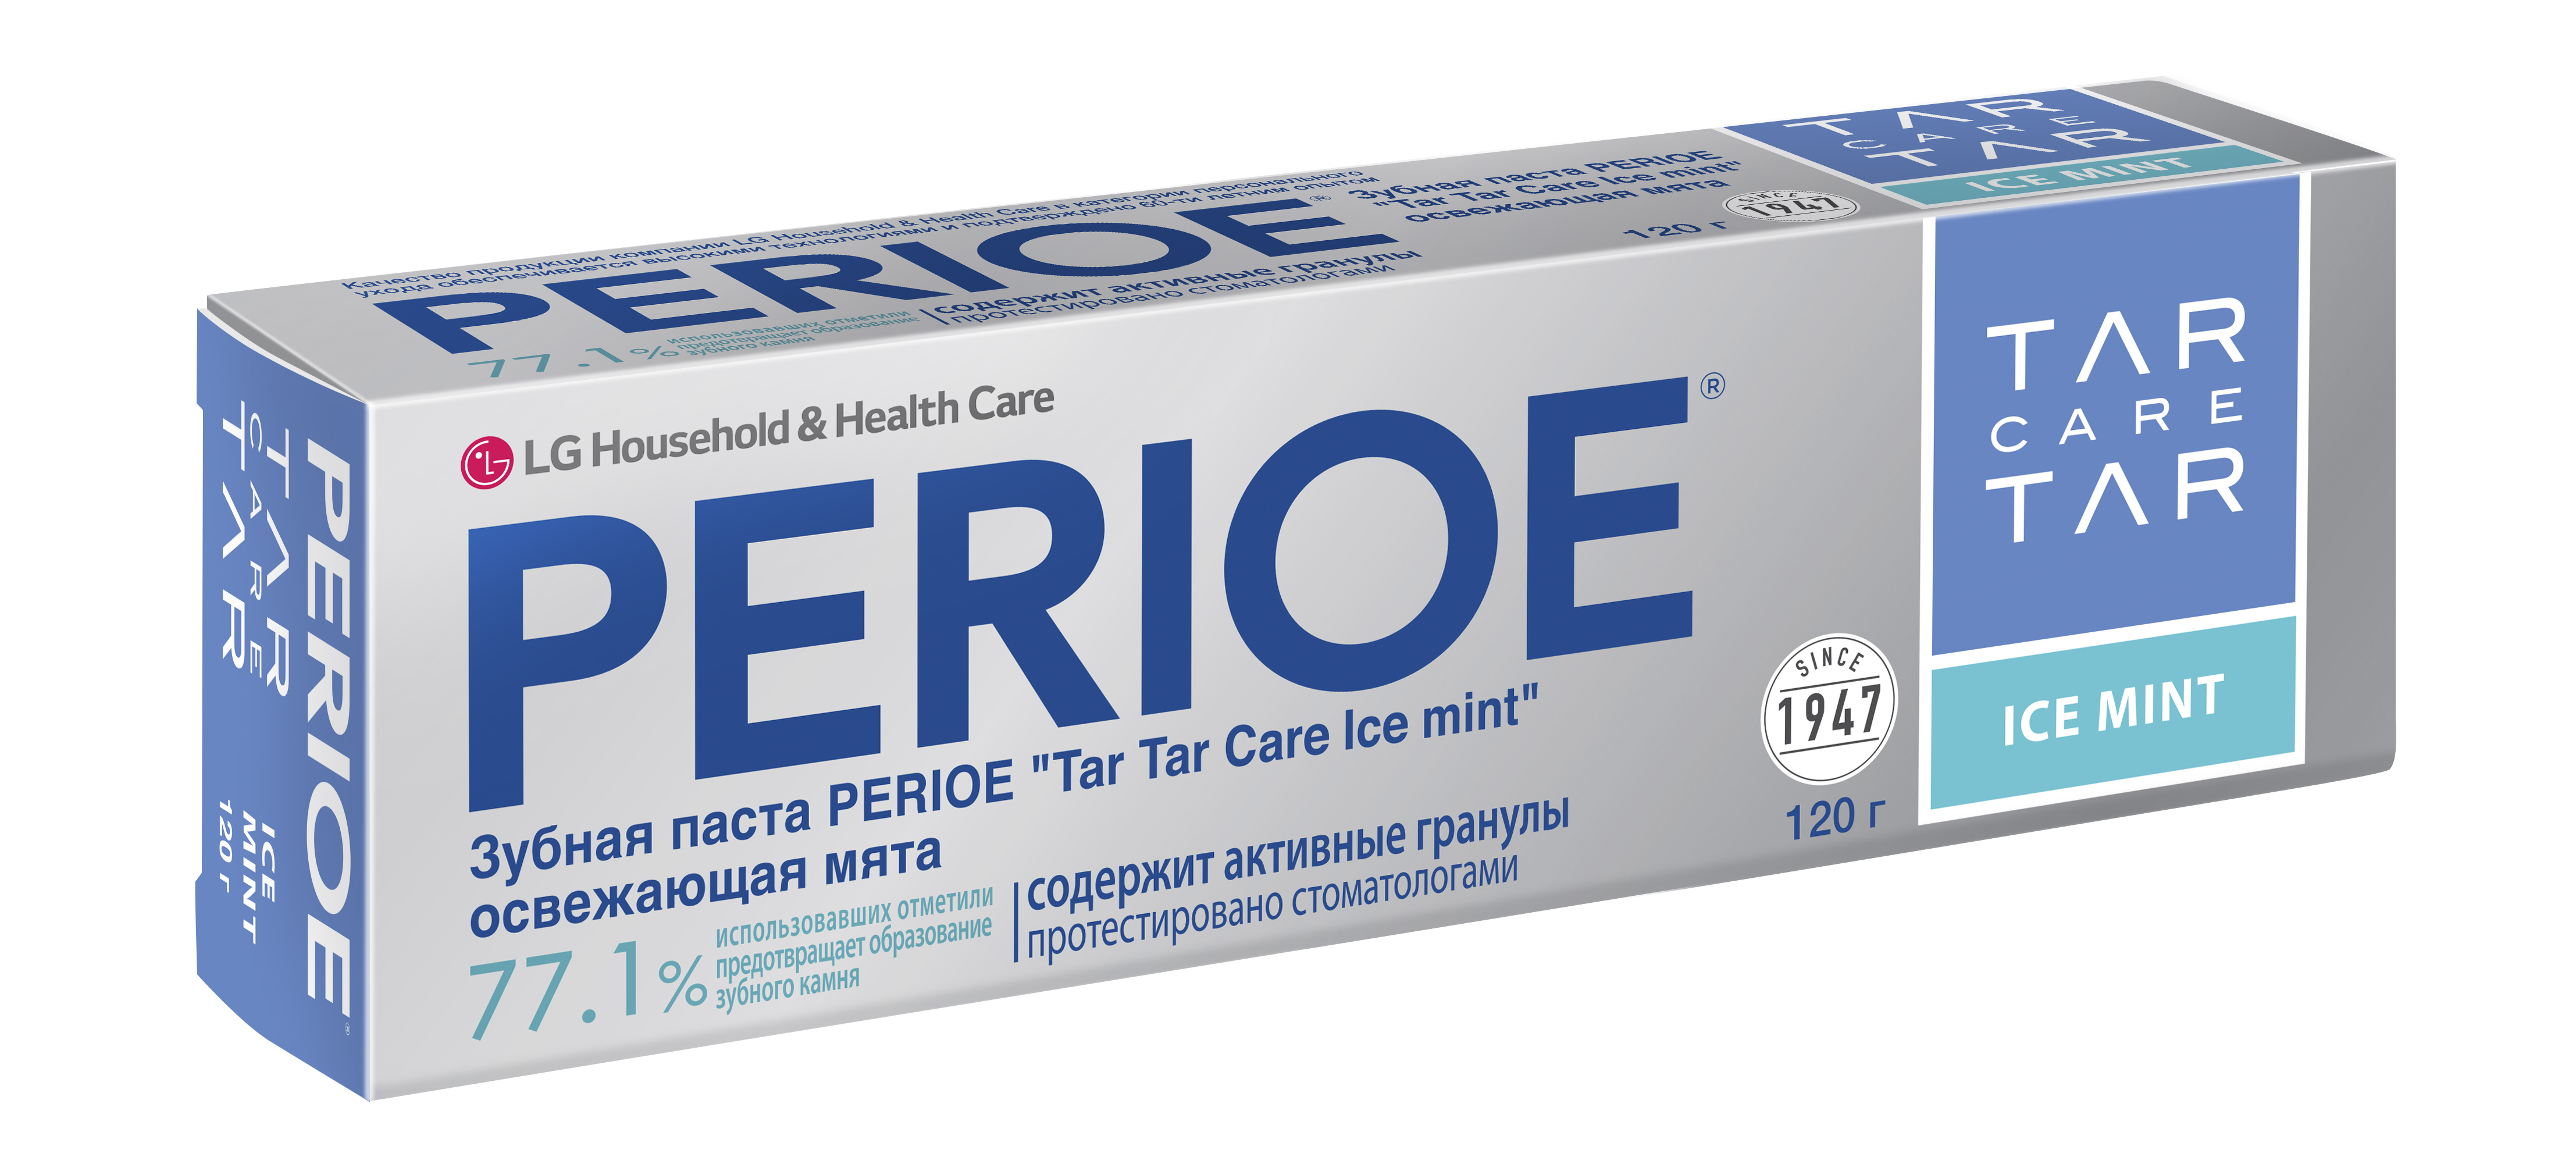 Перио паста зубная освежающая мята "tar tar care ice mint" туба 120г